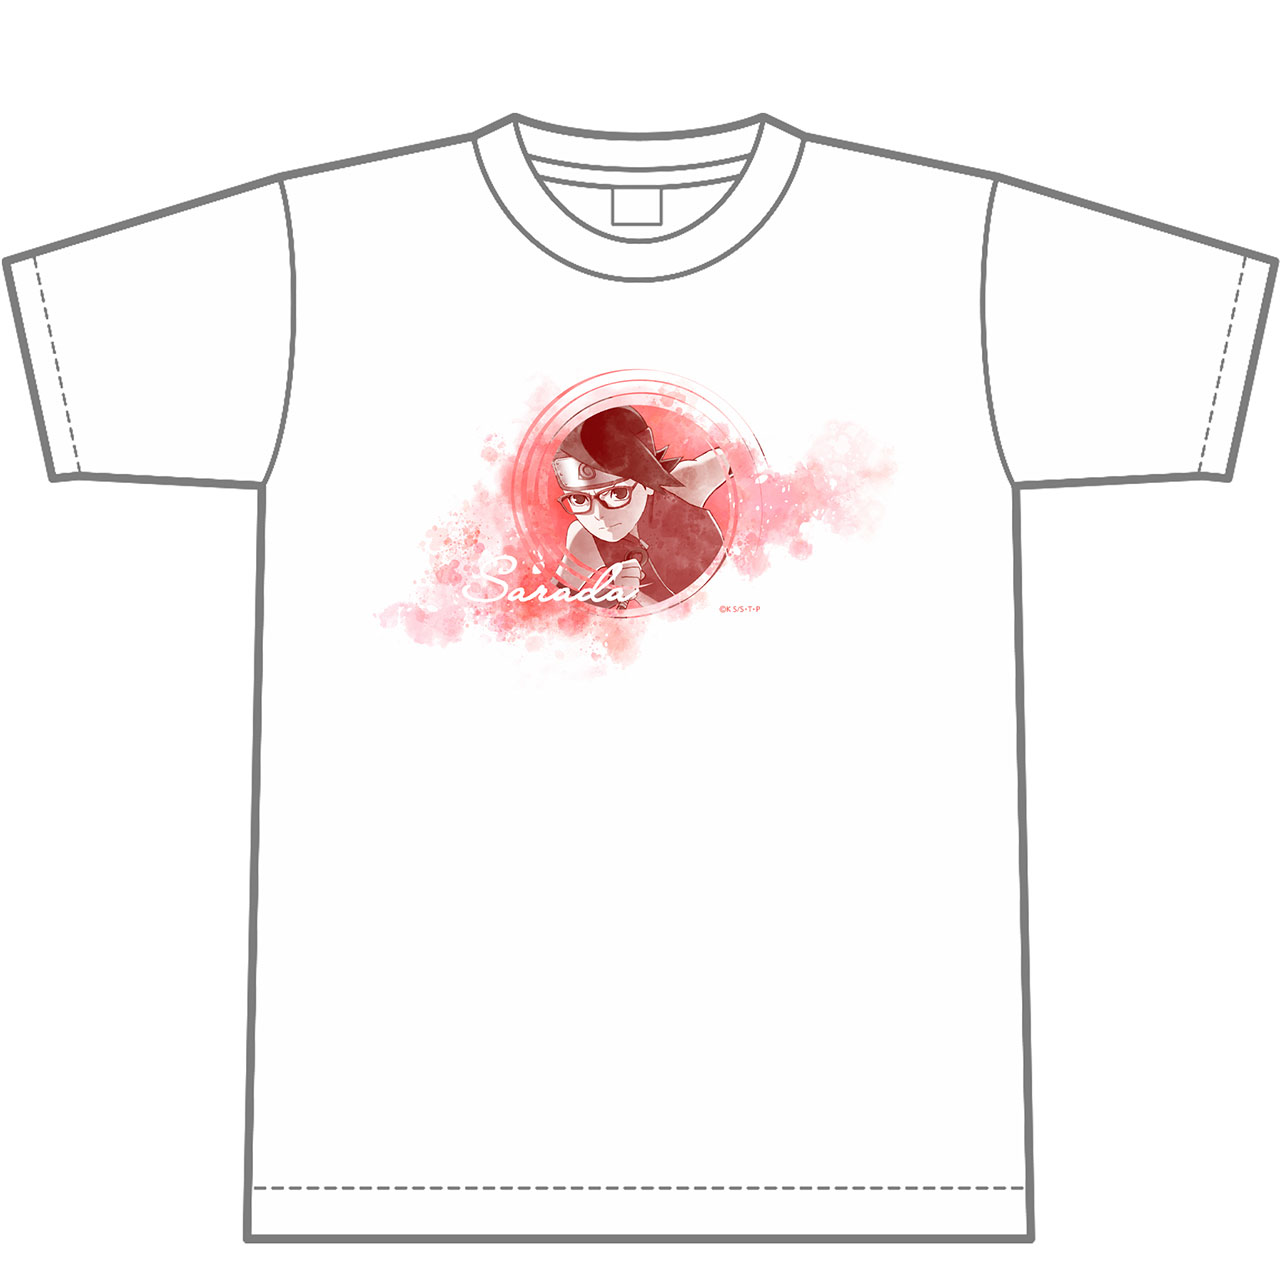 BORUTO-ボルト- NARUTO NEXT GENERATIONS Tシャツ サラダ